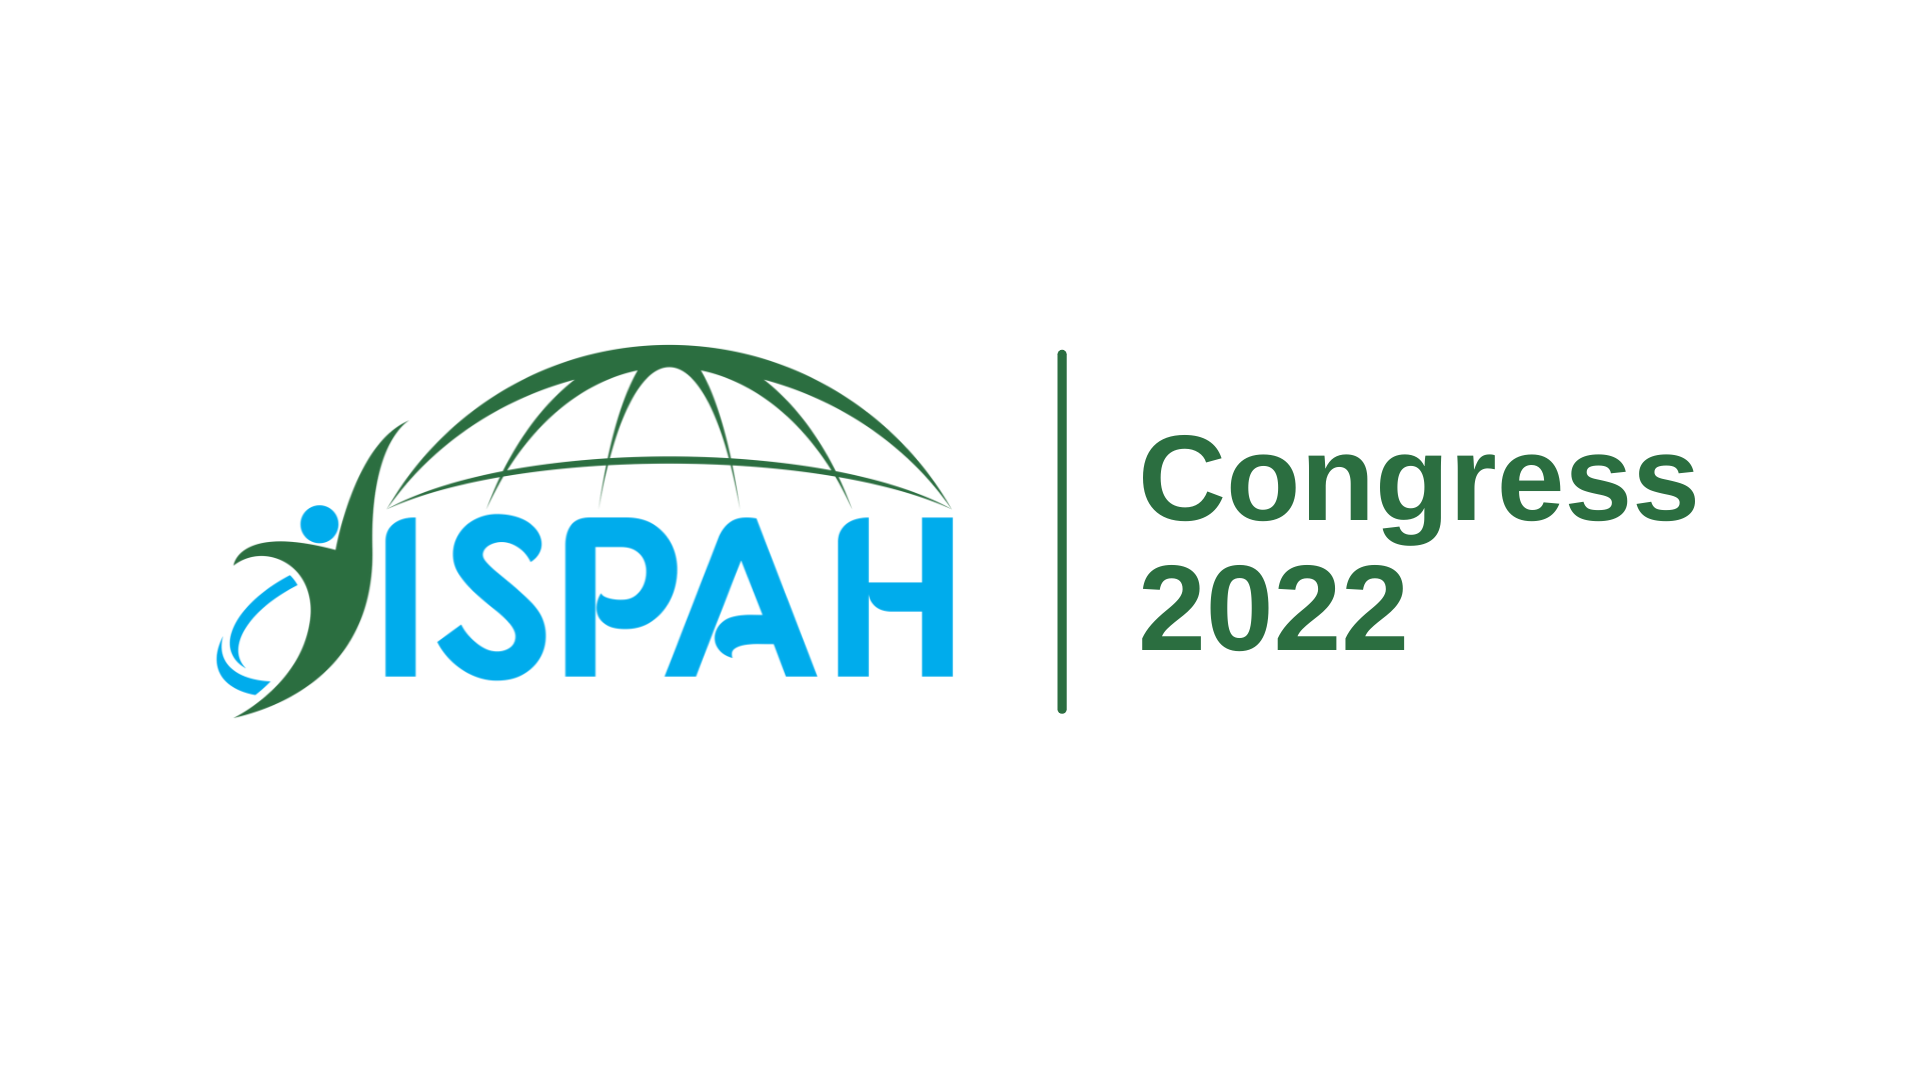 ISPAH Congress 2022 website full of useful information! ISPAH